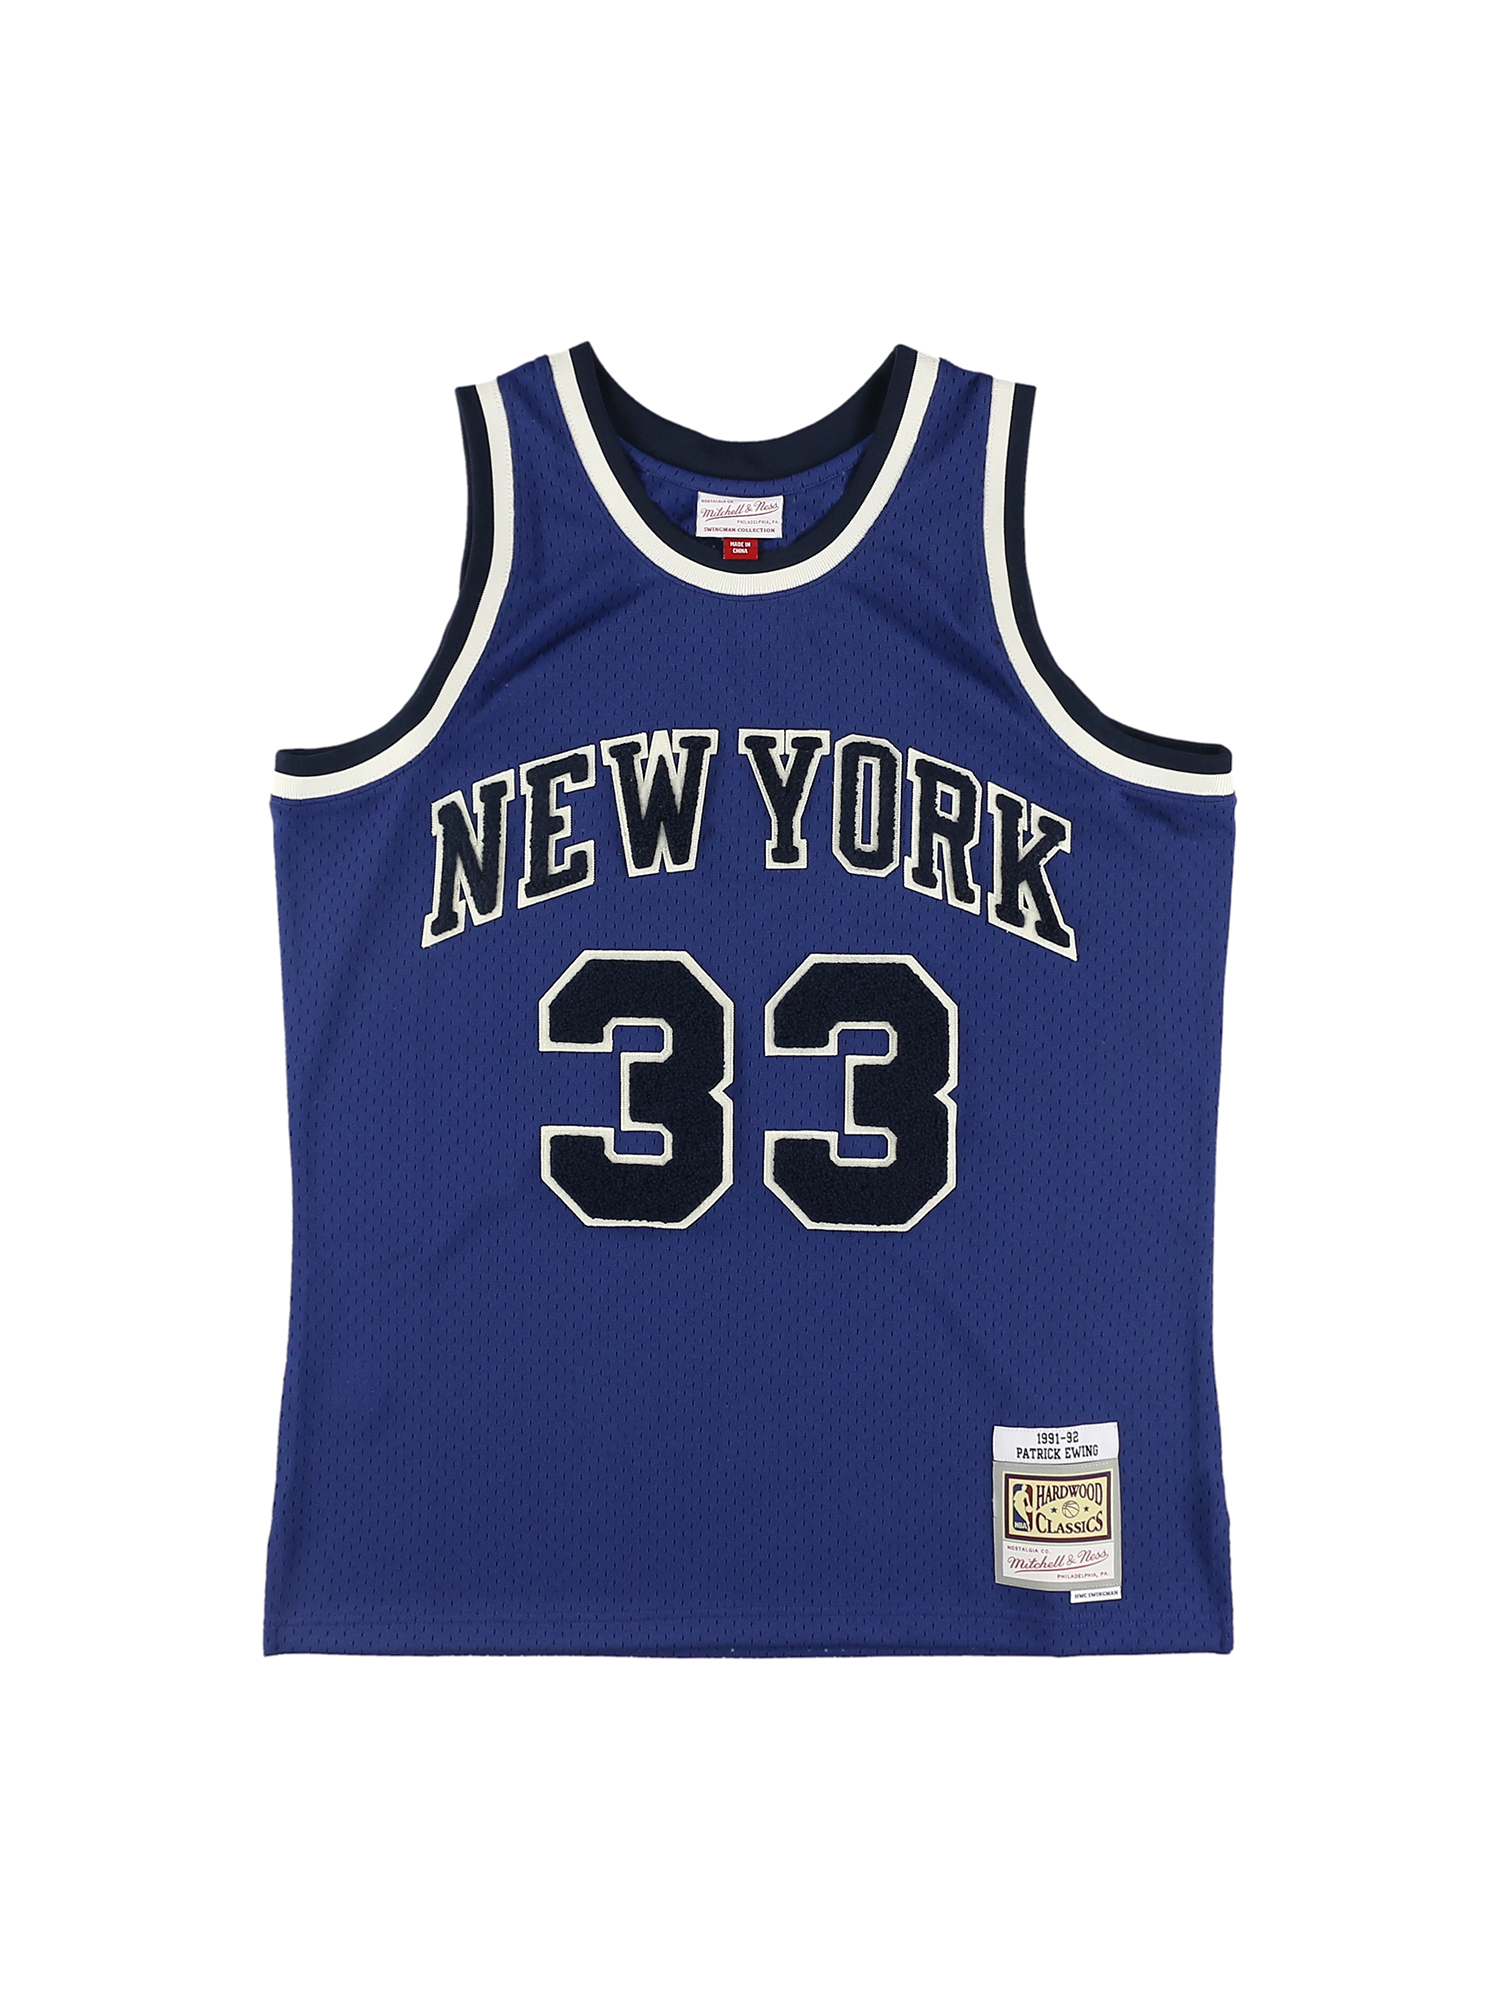 NBA New York Knicks Patric Ewing ジャージ 46サイズ46 - ウェア